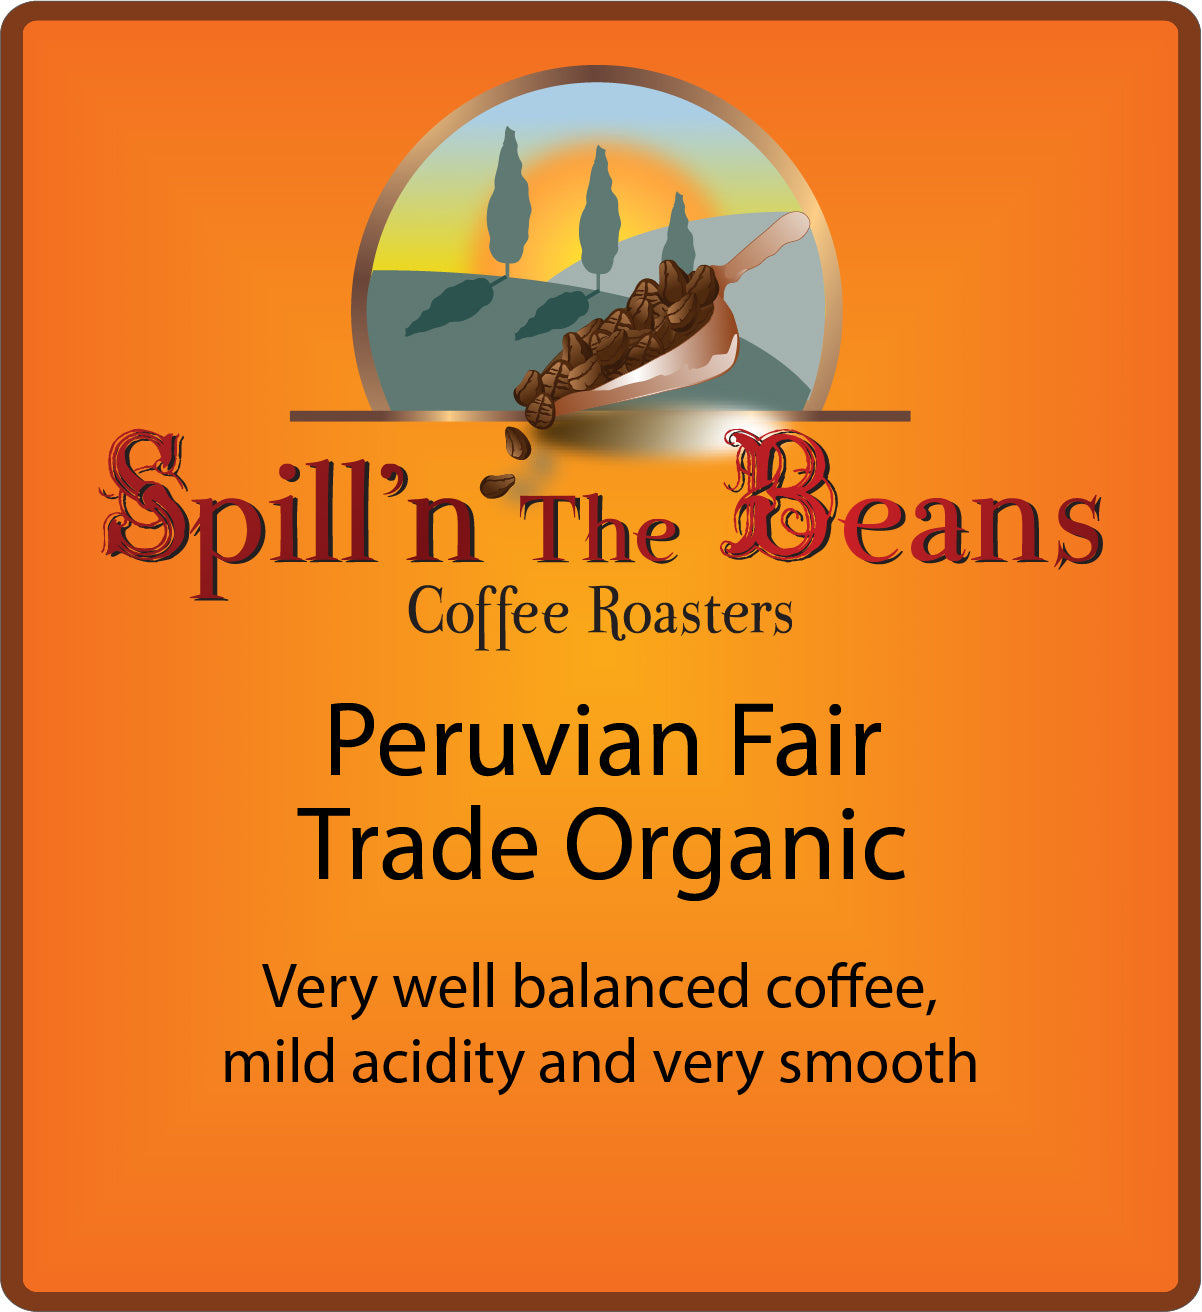 Peruvian Fair Trade Organic